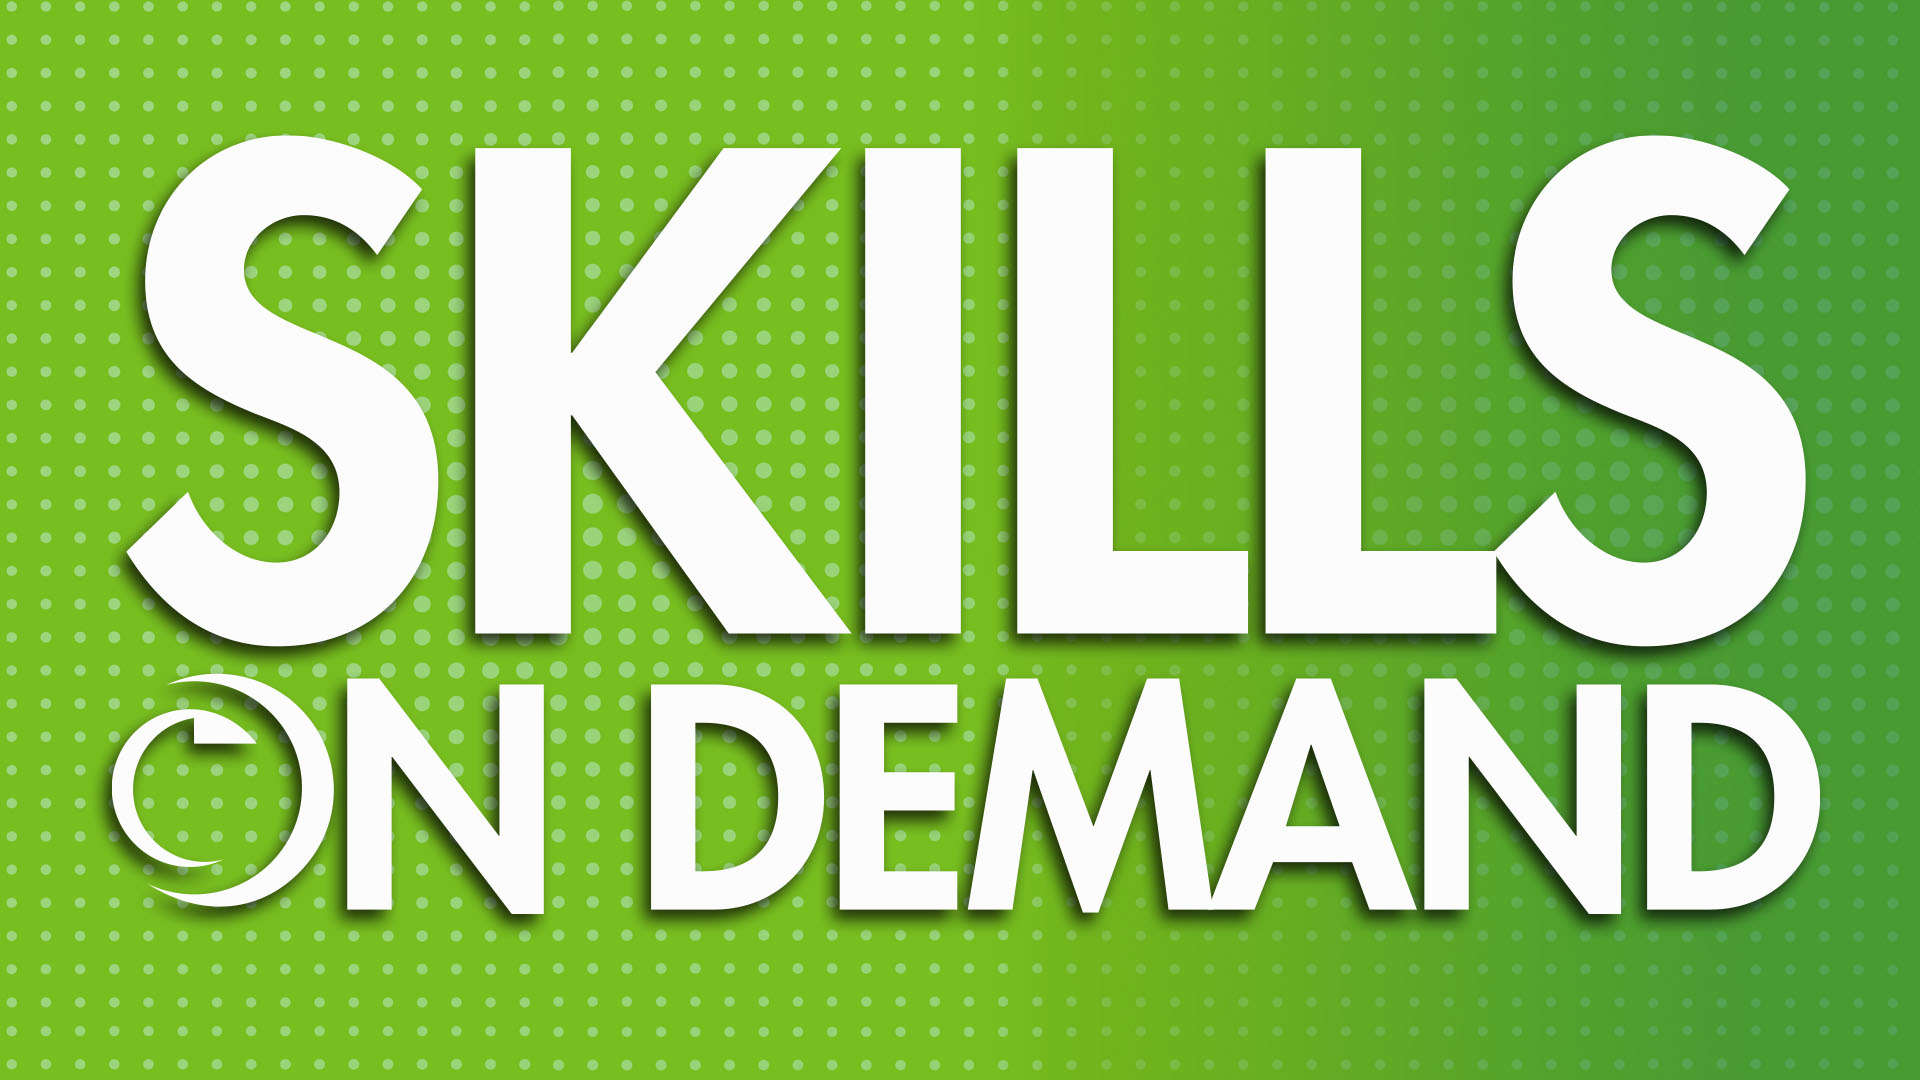 A logo saying "skills on demand"